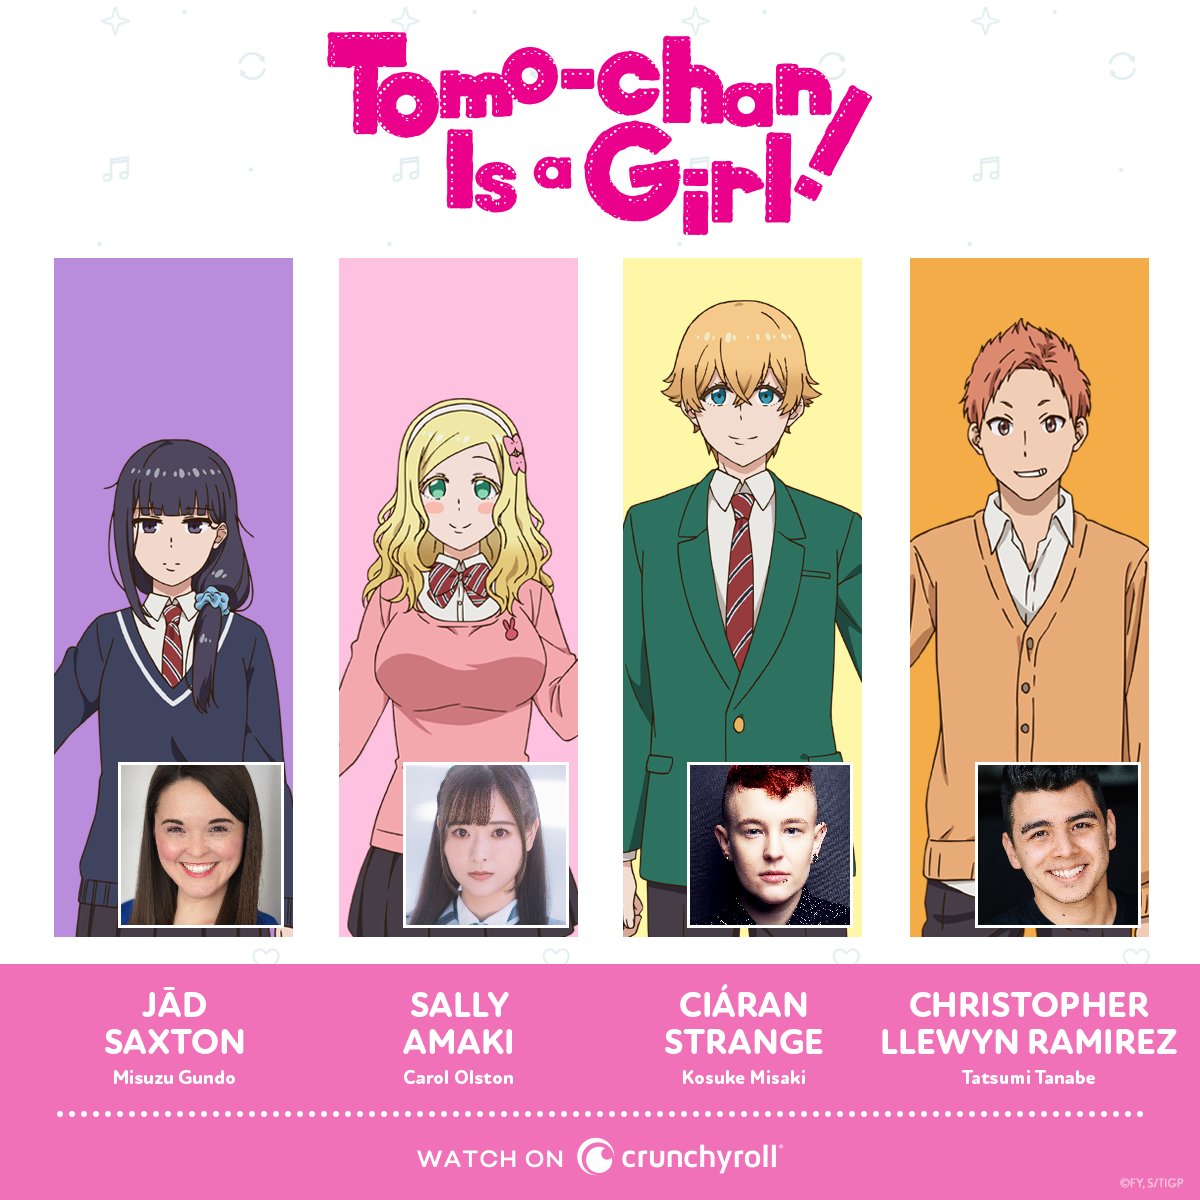 Tomo Aizawa Cosplay Costume Anime Tomo-chan Is A Girl Junichirou